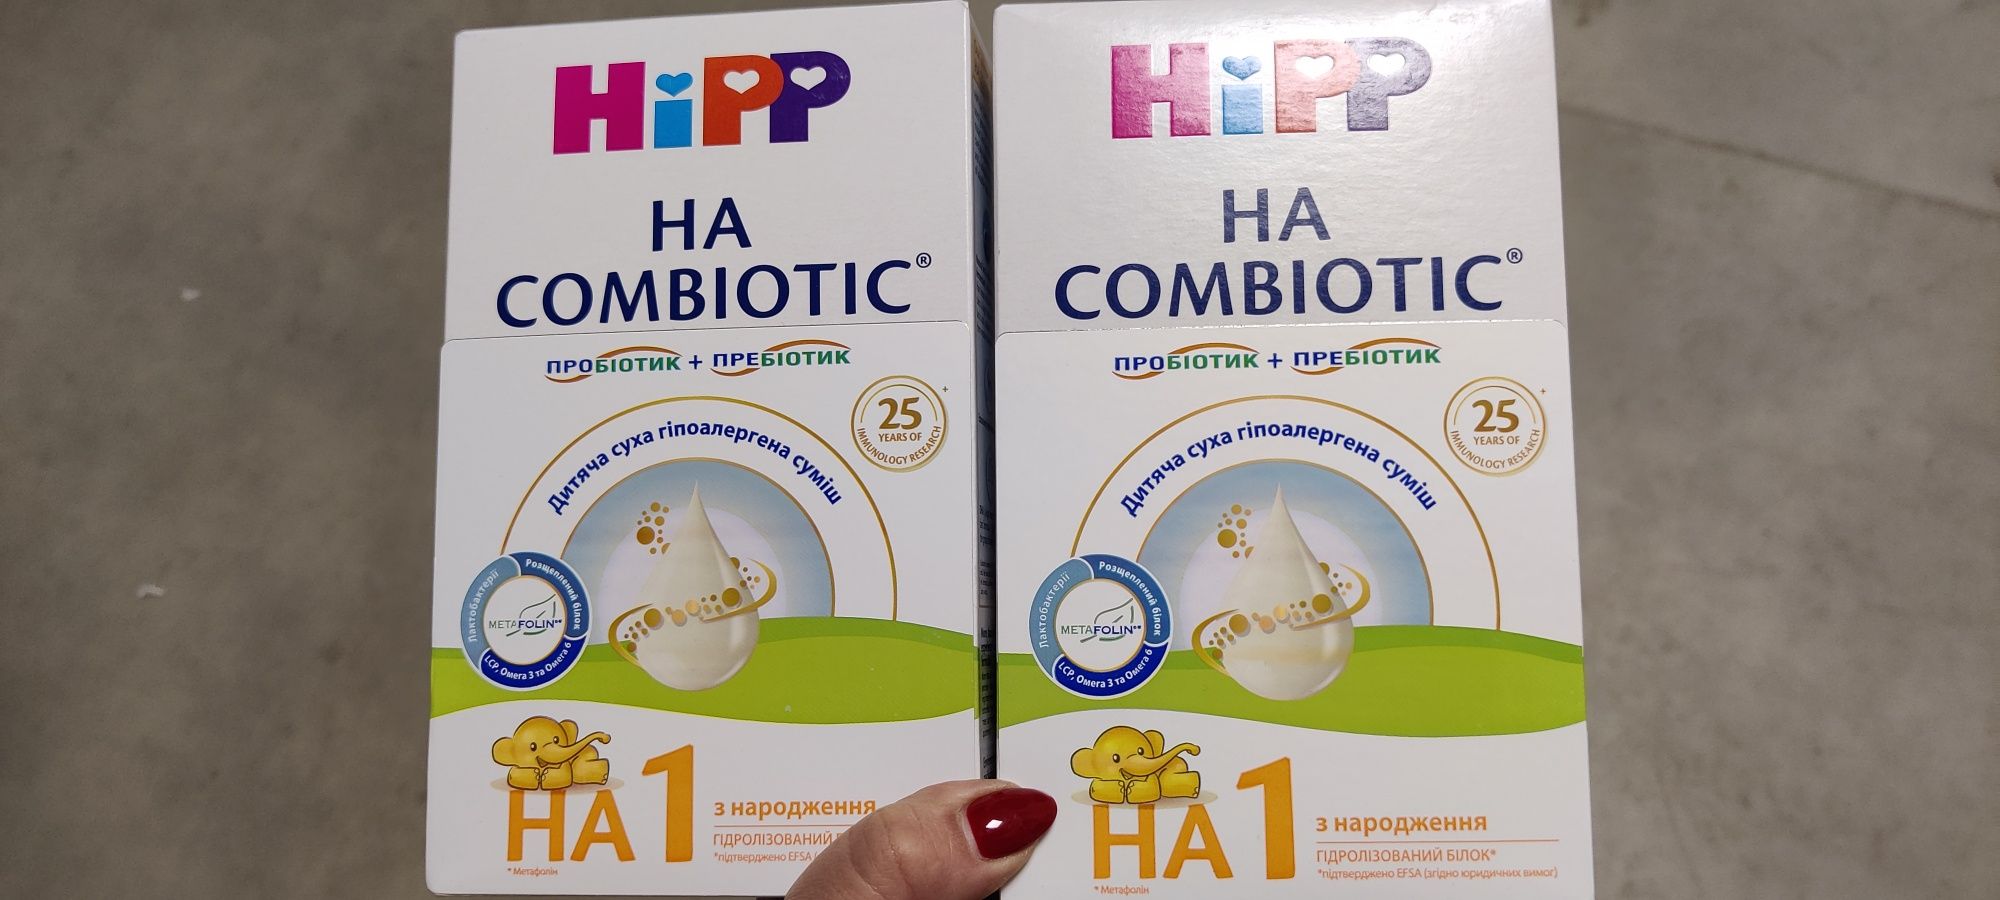 Ціна за 2 HIPP  Combiotic НА 1 гіпоалергенна з 
 
Суміш мол